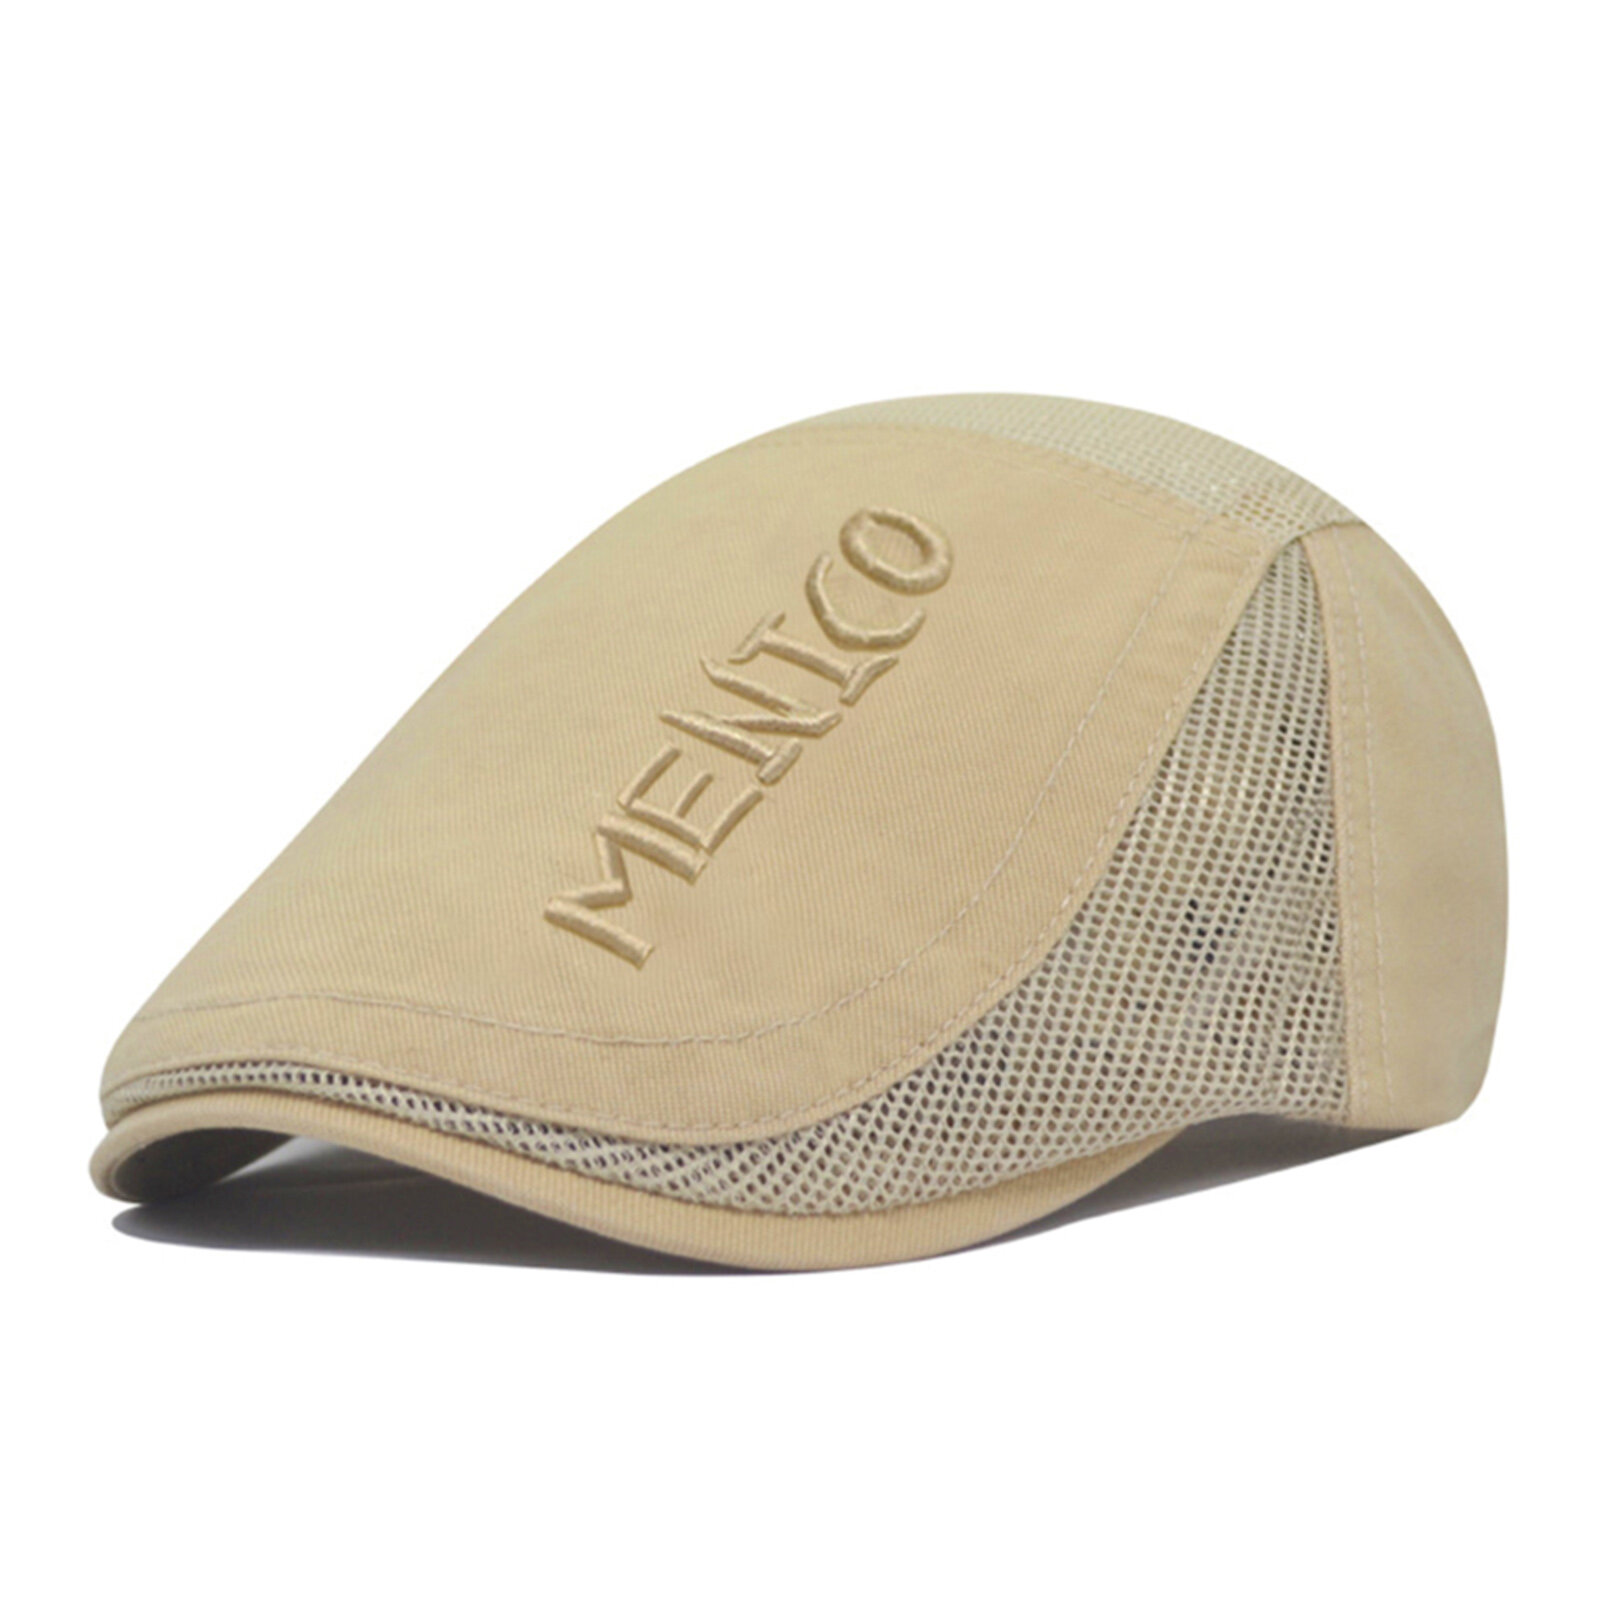 Menico Men's Cotton Breathable Shade Short Brim Casual Retro Avant-Garde Hat Beret Flat Cap